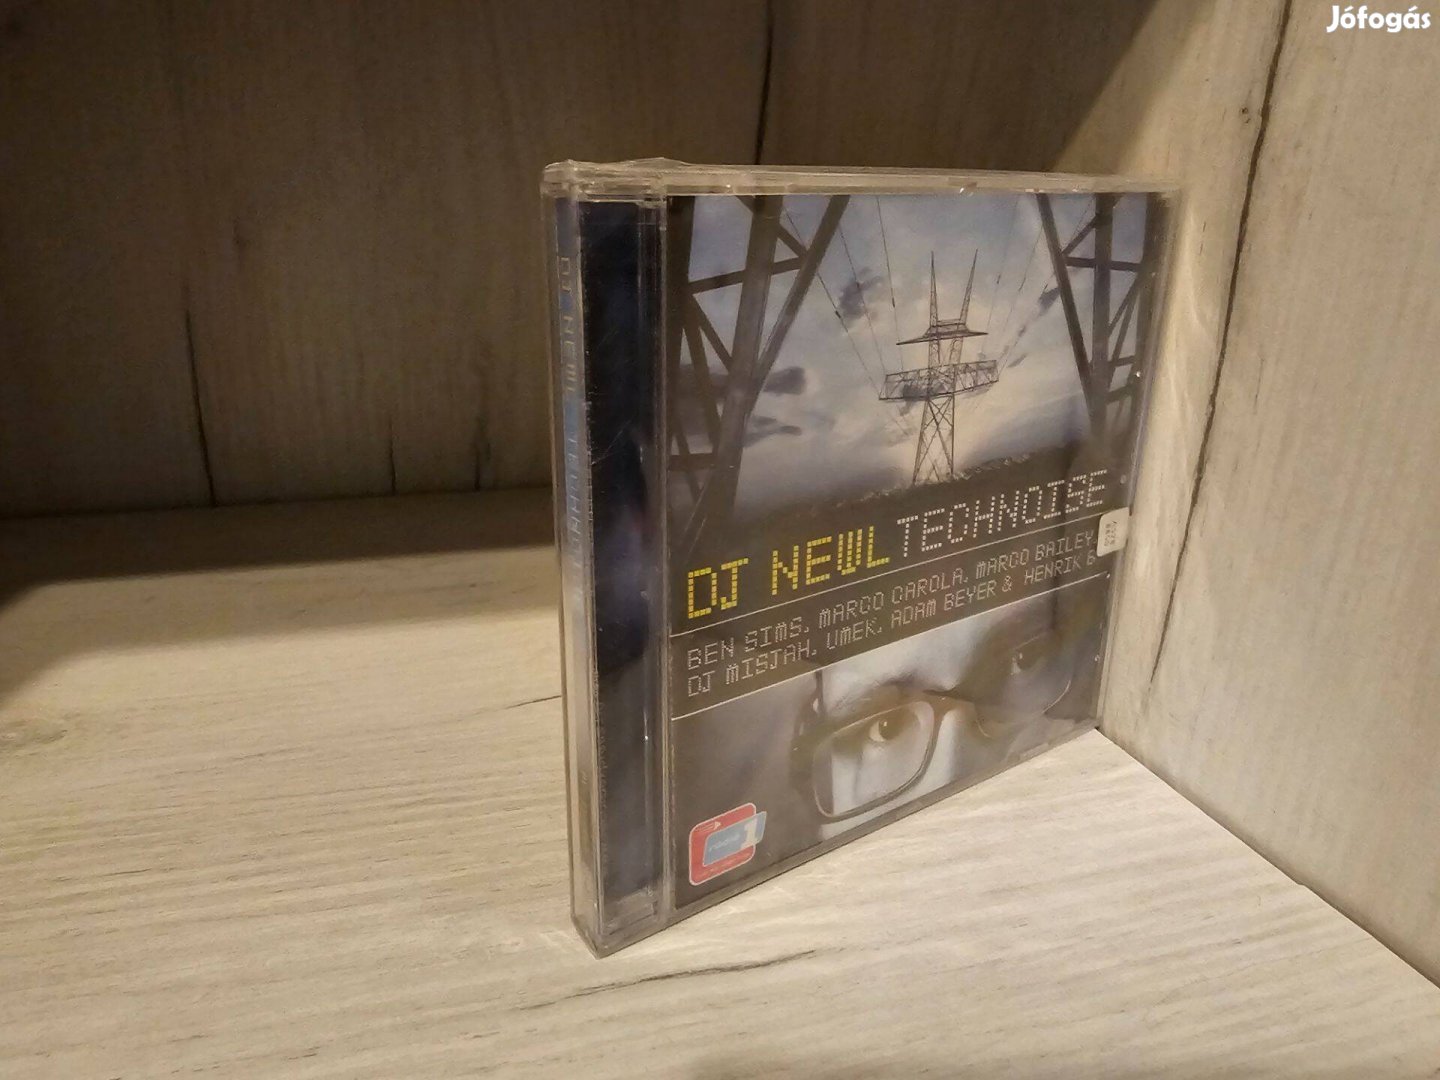 DJ Newl Technoise CD fóliás